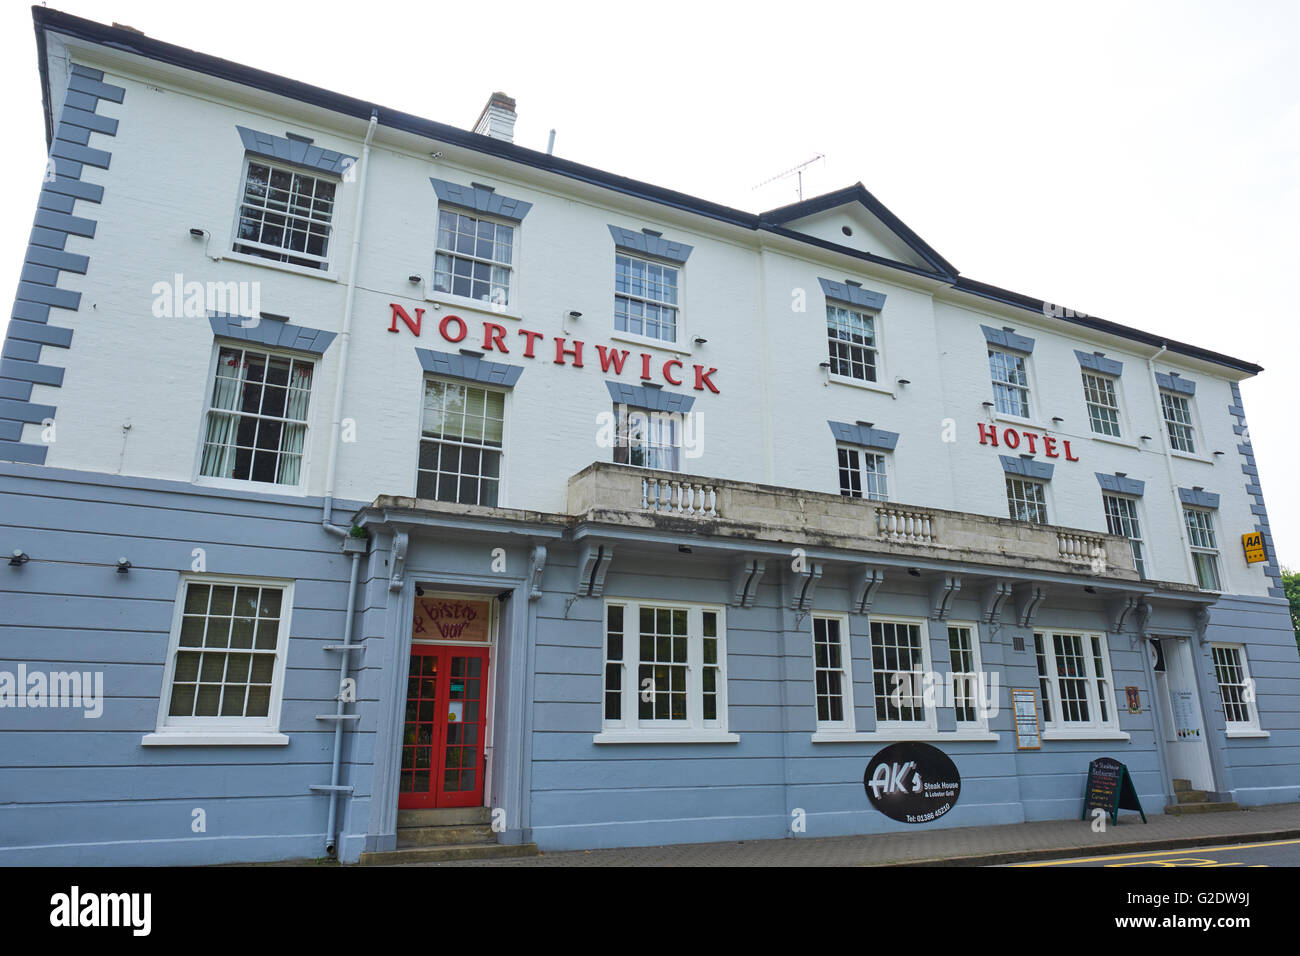 Northwick Hotel A Former Coaching Inn Waterside Evesham Wychavon Worcestershire UK Stock Photo